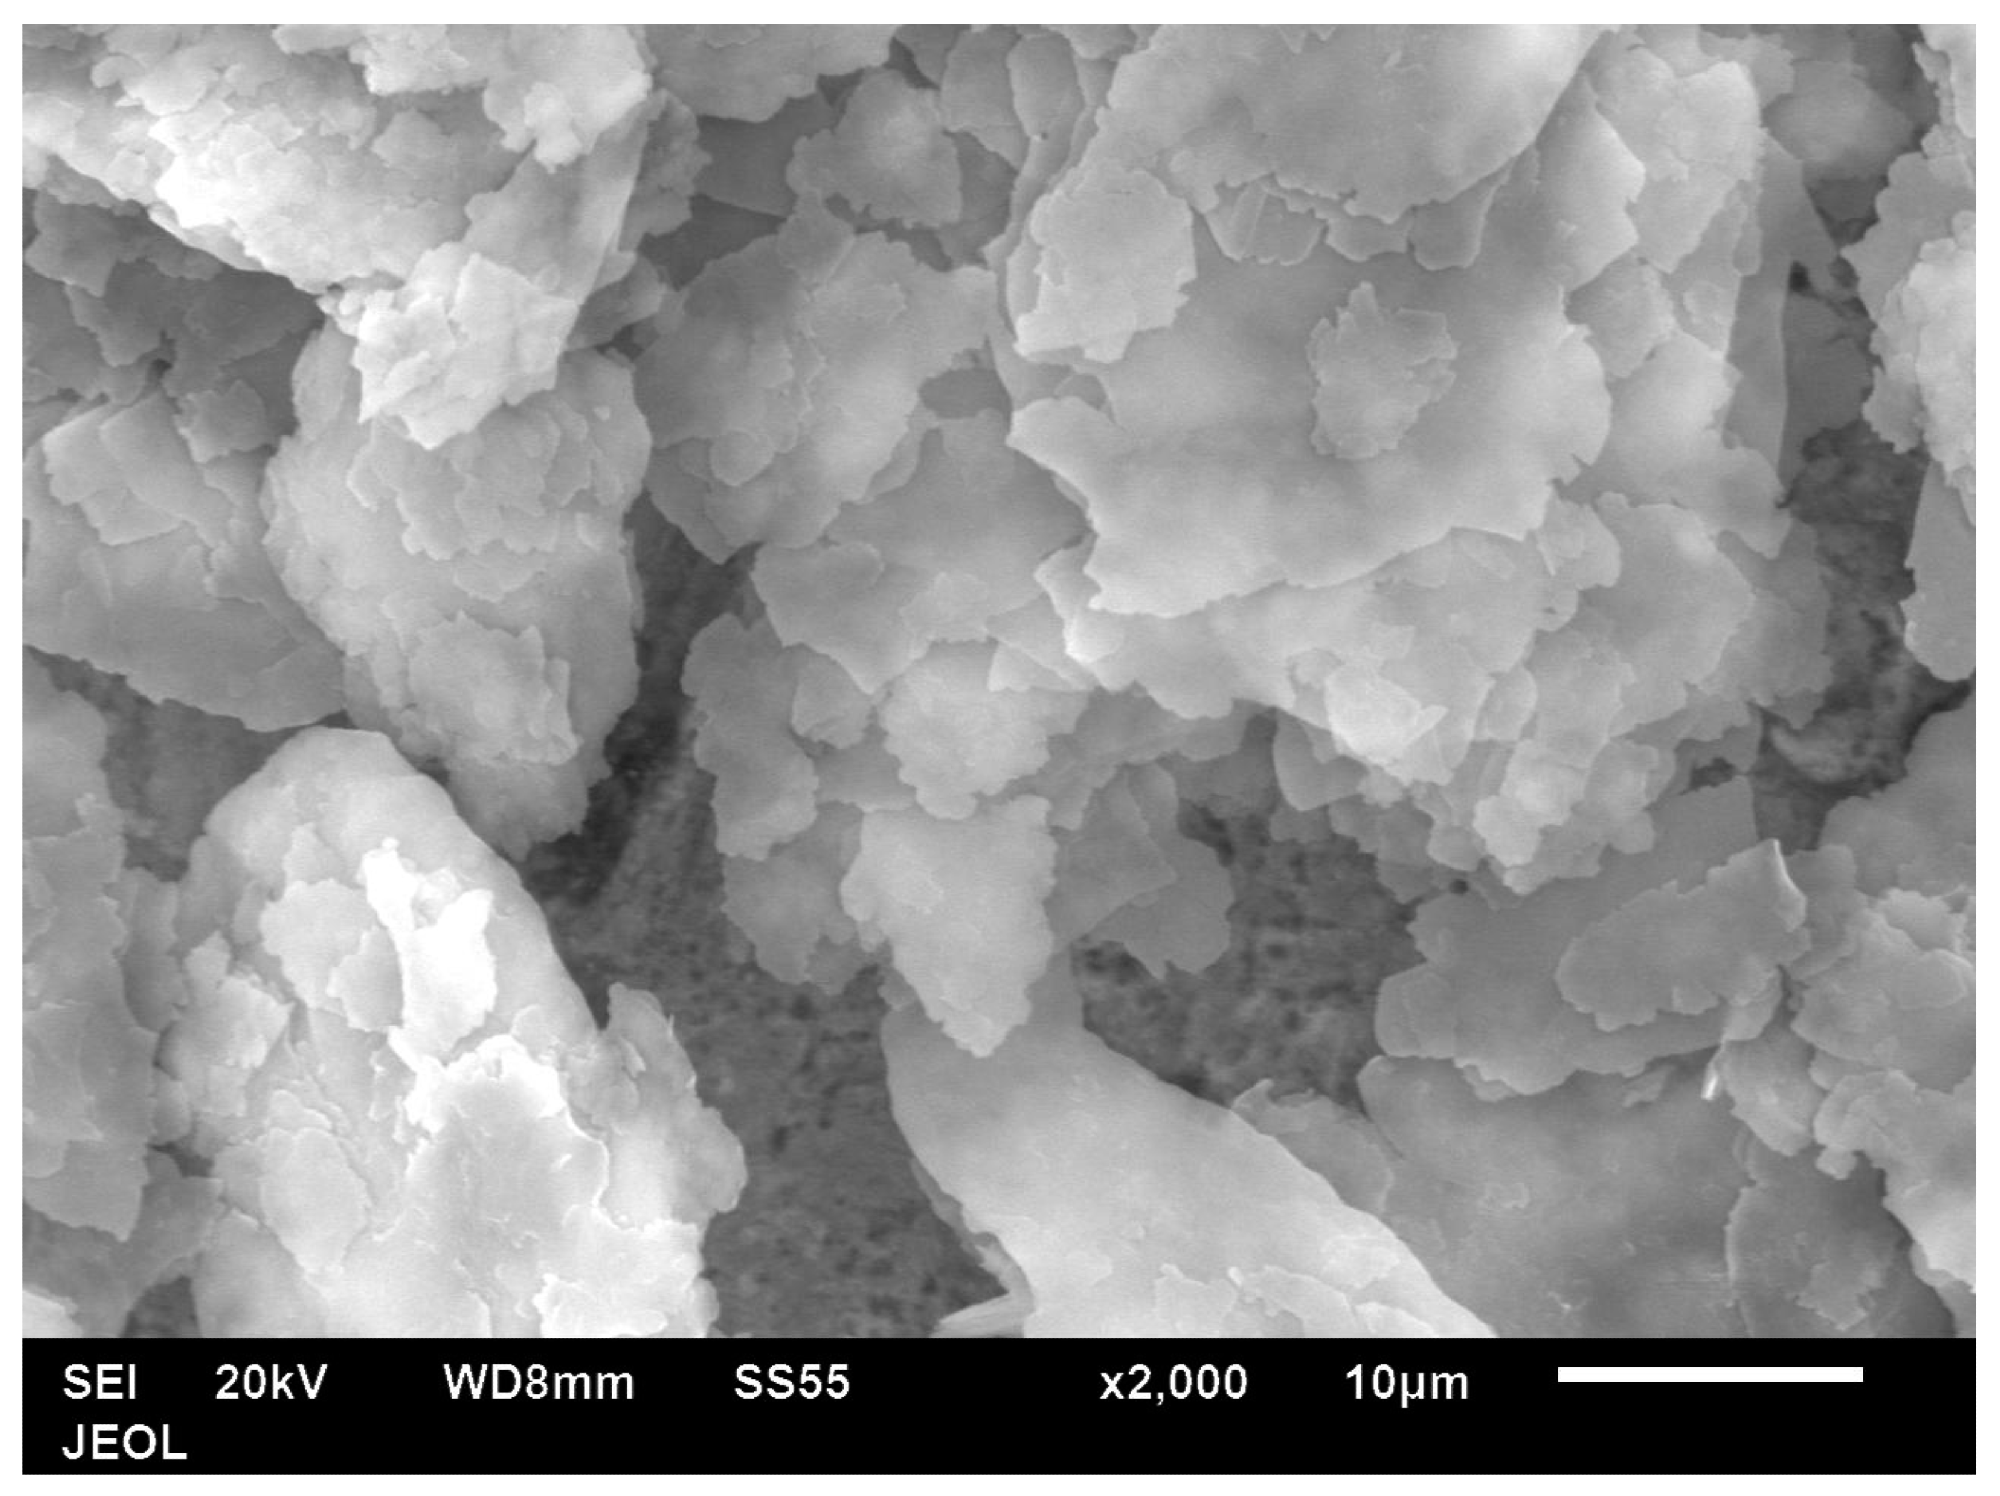 SEM image of Al nano platelet particles.